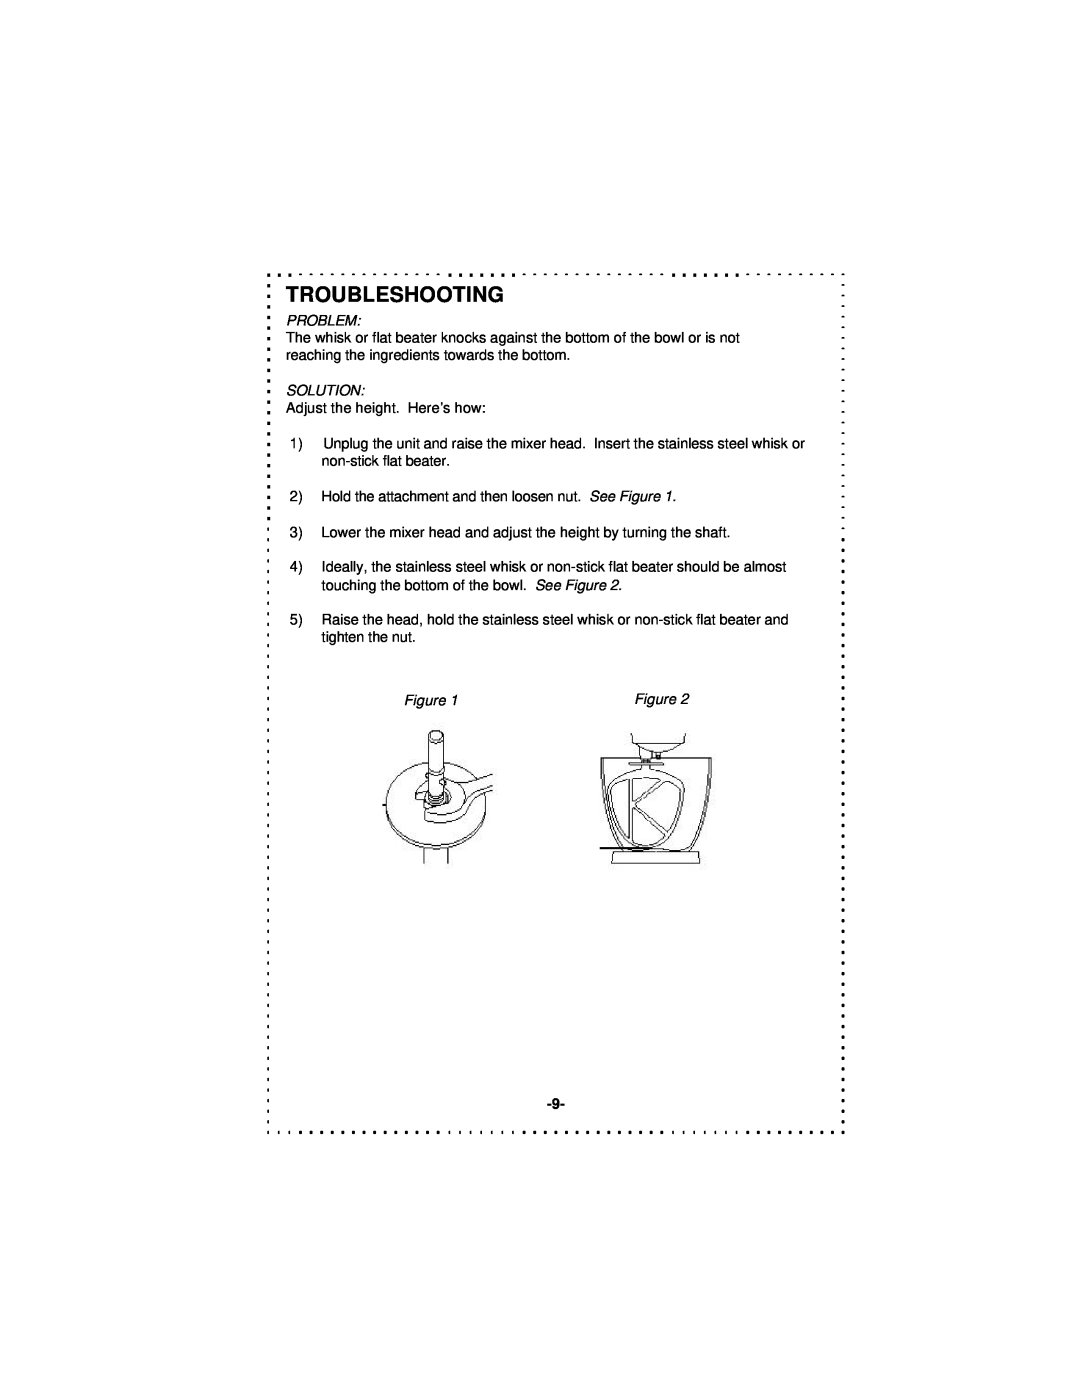 DeLonghi DSM5 - 7 Series instruction manual Troubleshooting, Problem, Solution, Figure 